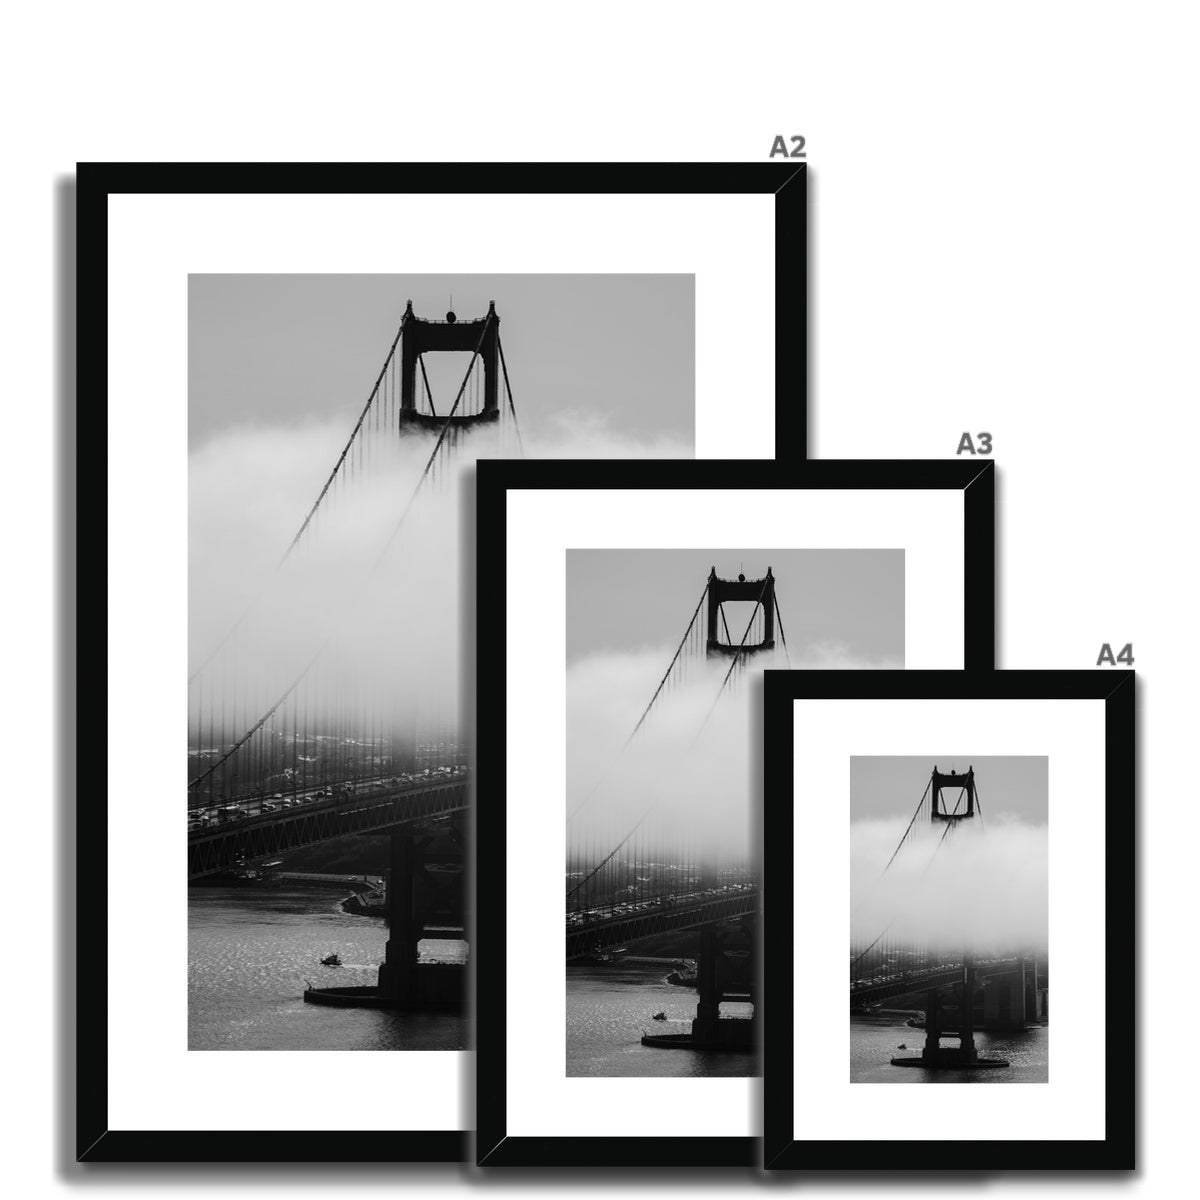 A bridge in a towel of fog Framed & Mounted Print